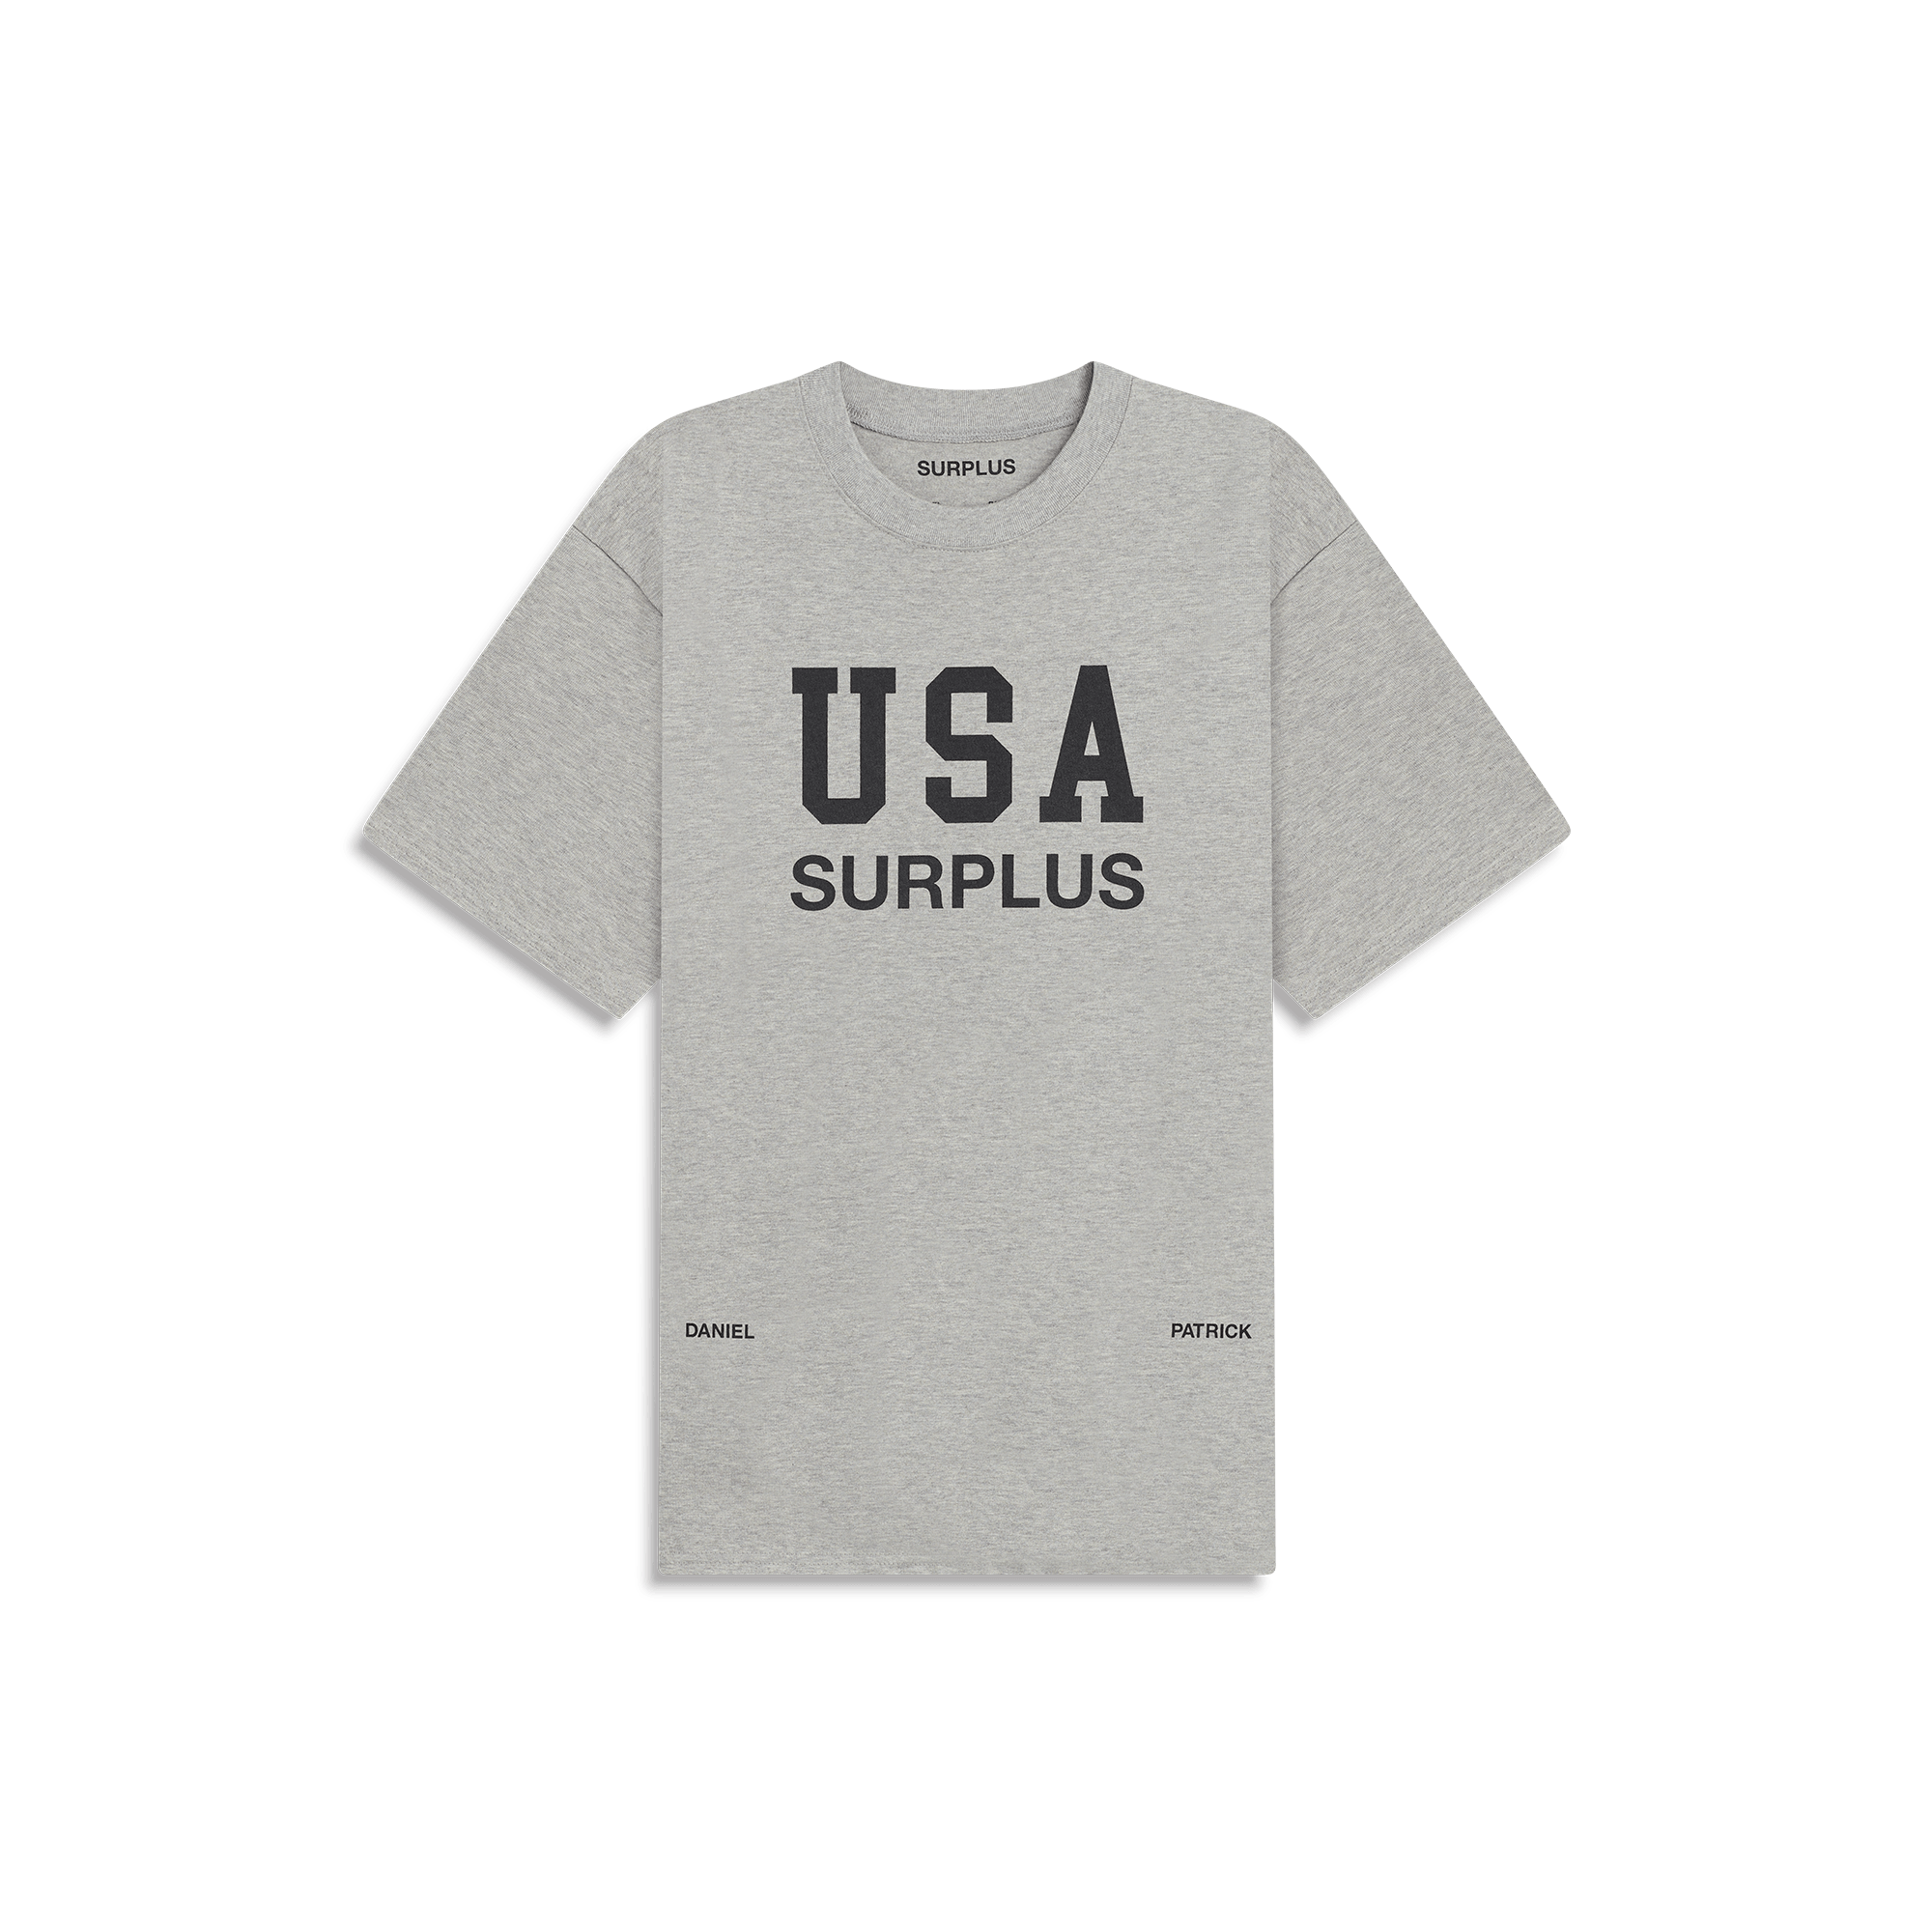 USA surplus tee / heather grey + black